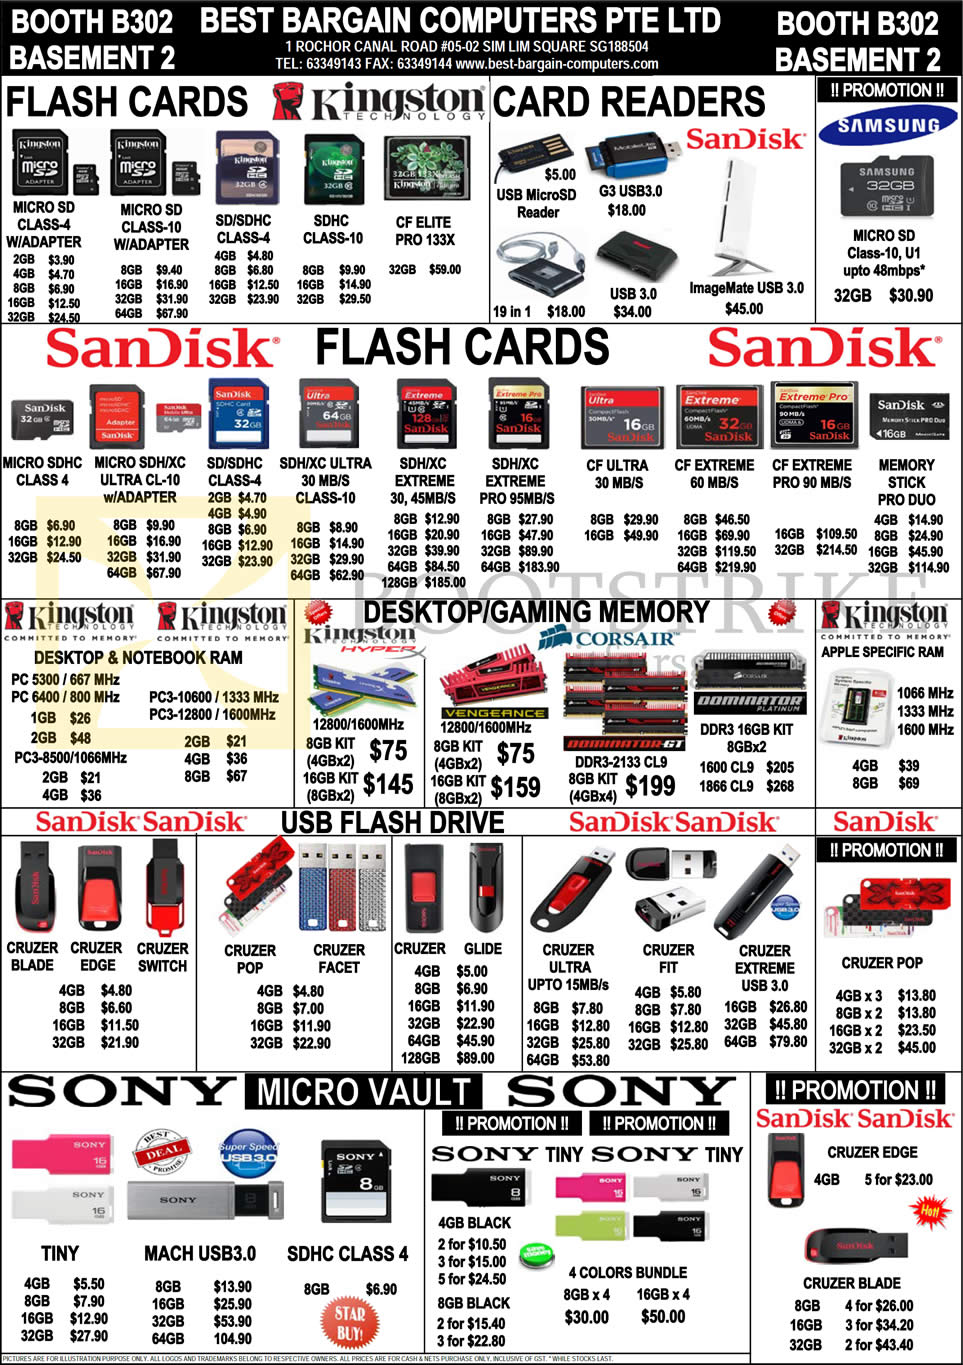 IT SHOW 2013 price list image brochure of Best Bargain Flash Memory MicroSD Kingston, CompactFlash CF, Sandisk, Samsung, Memory Stick Pro Duo, DDR2 DDR3 RAM, Apple, Corsair Vengenance Dominator, USB Sony, Cruzer